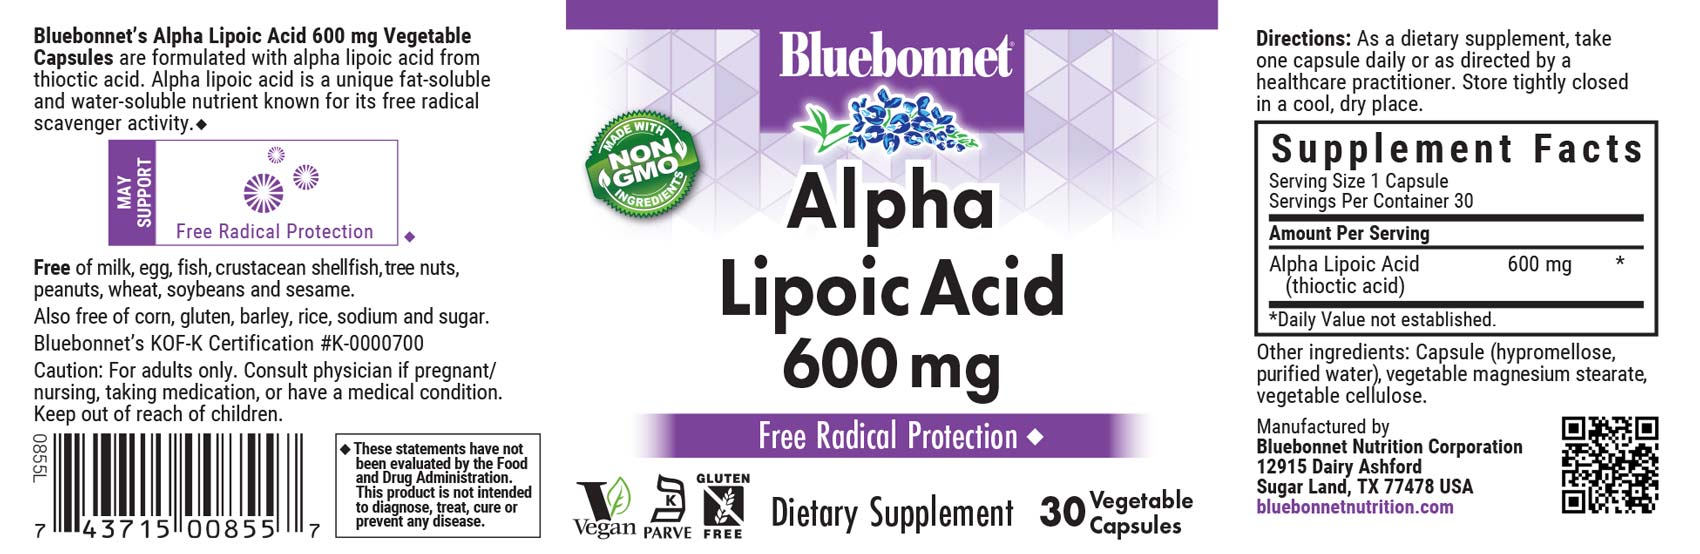 Bluebonnet's Alpha Lipoic Acid 600 mg. 30 vegetable capsules.